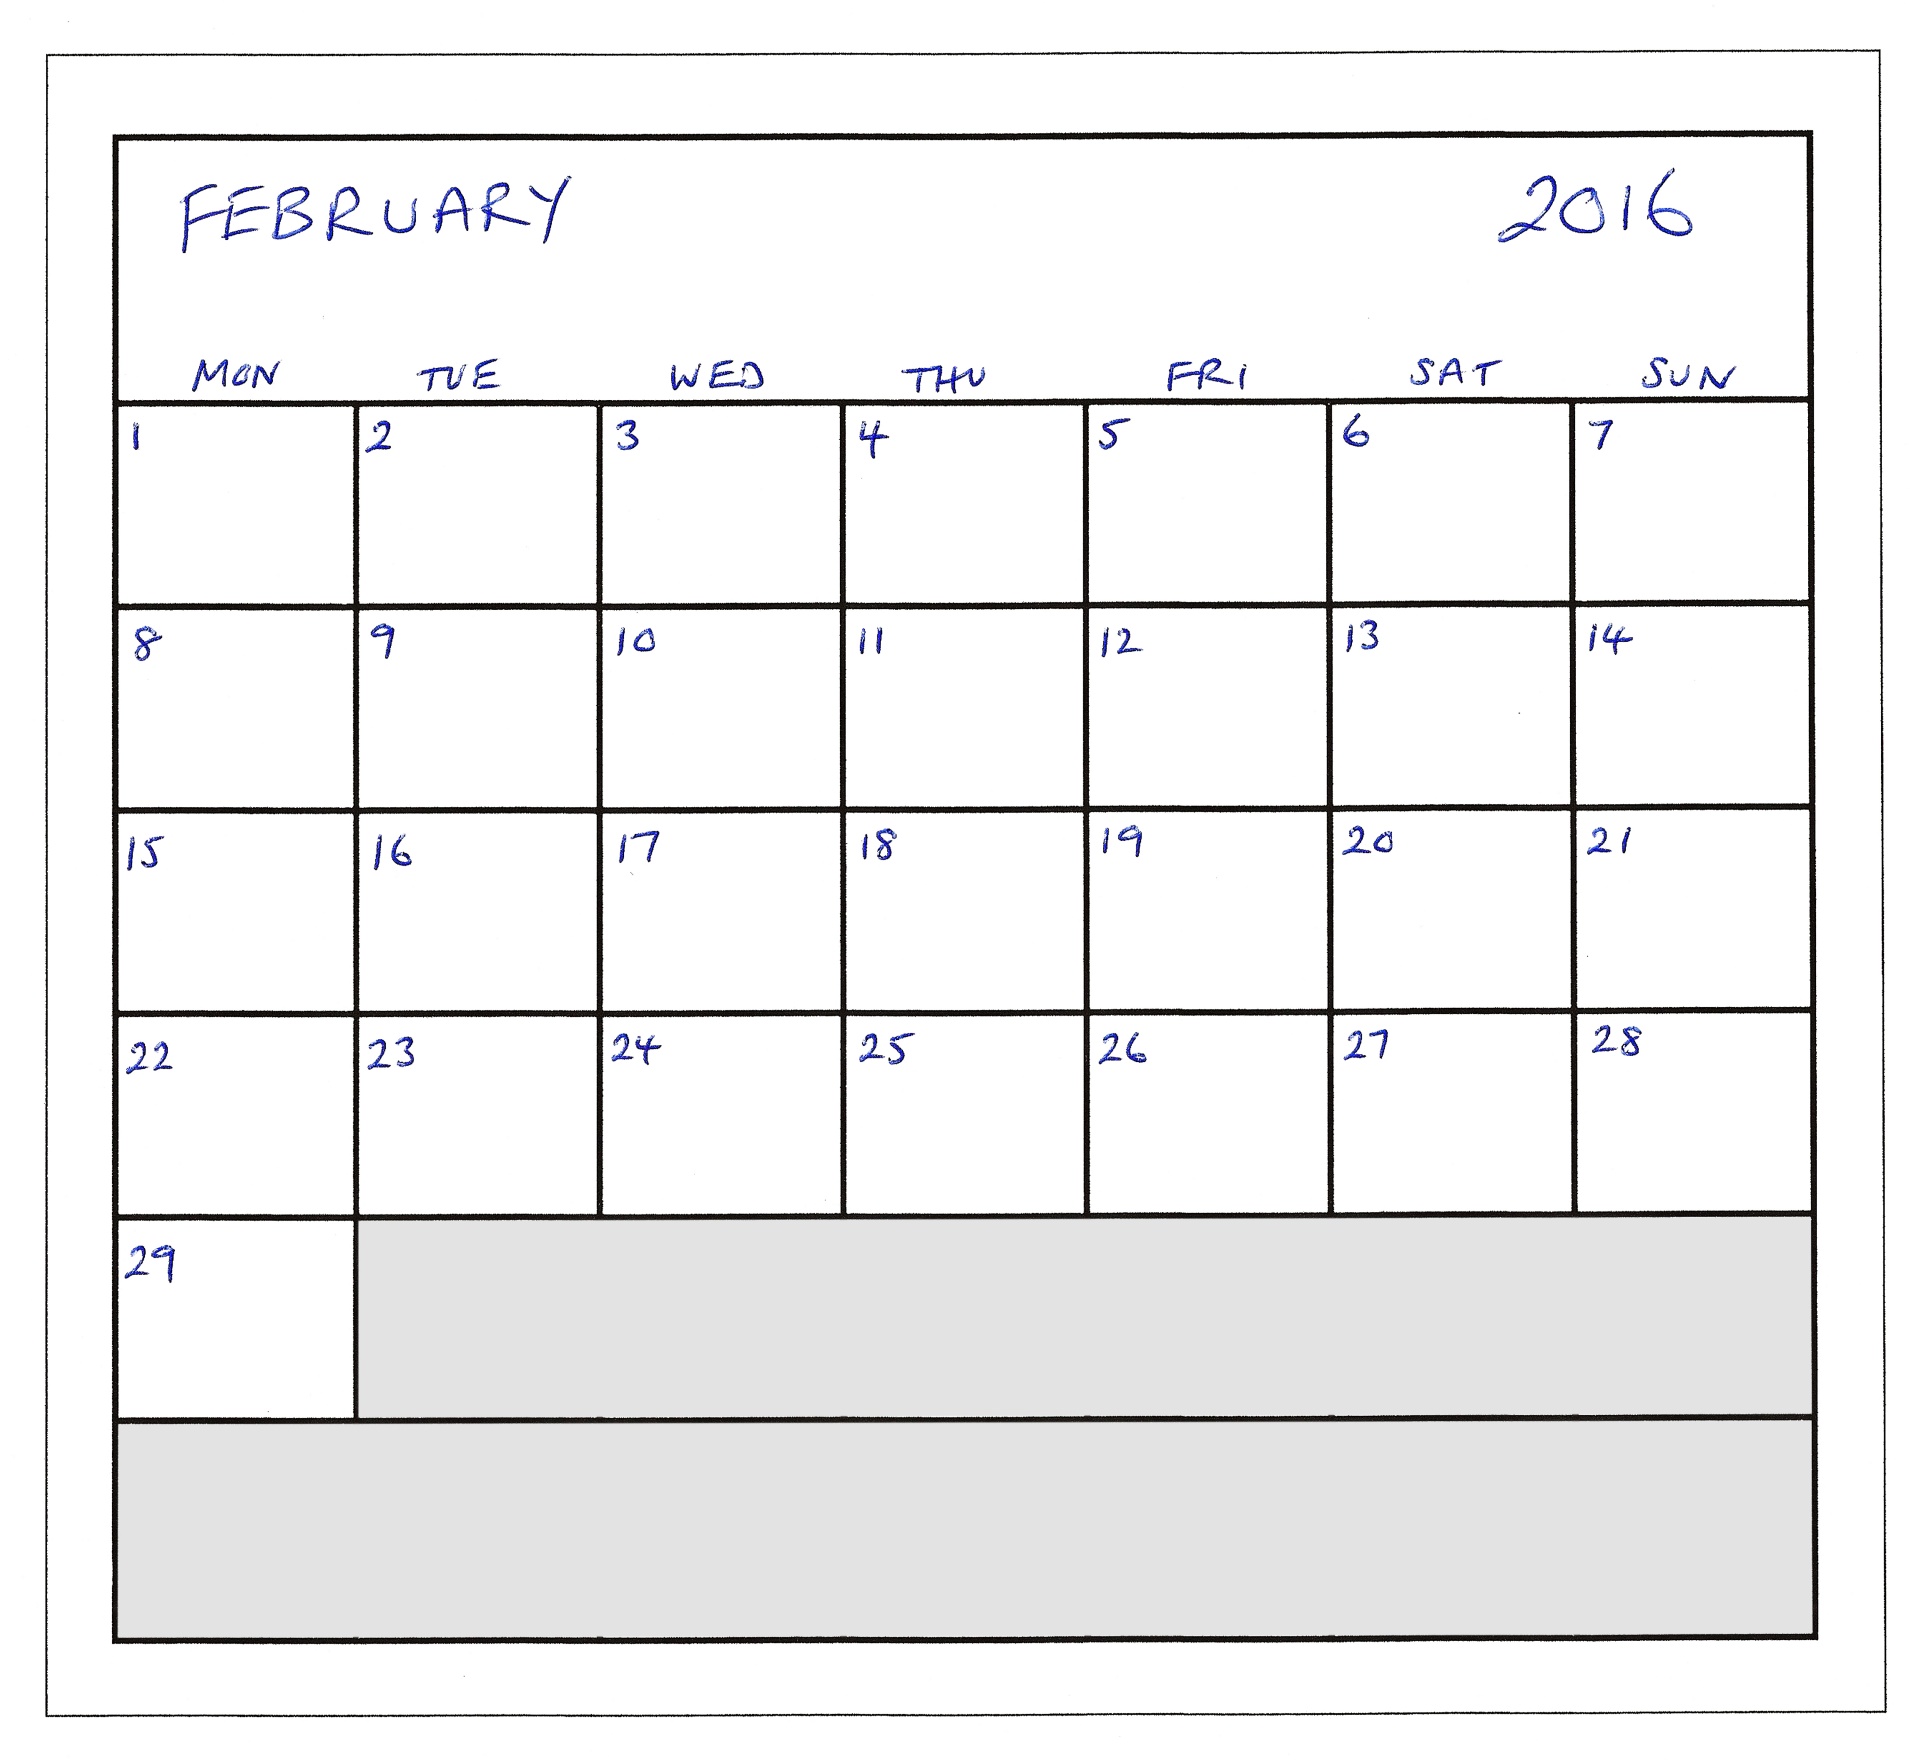 february 2016 calendar free photo